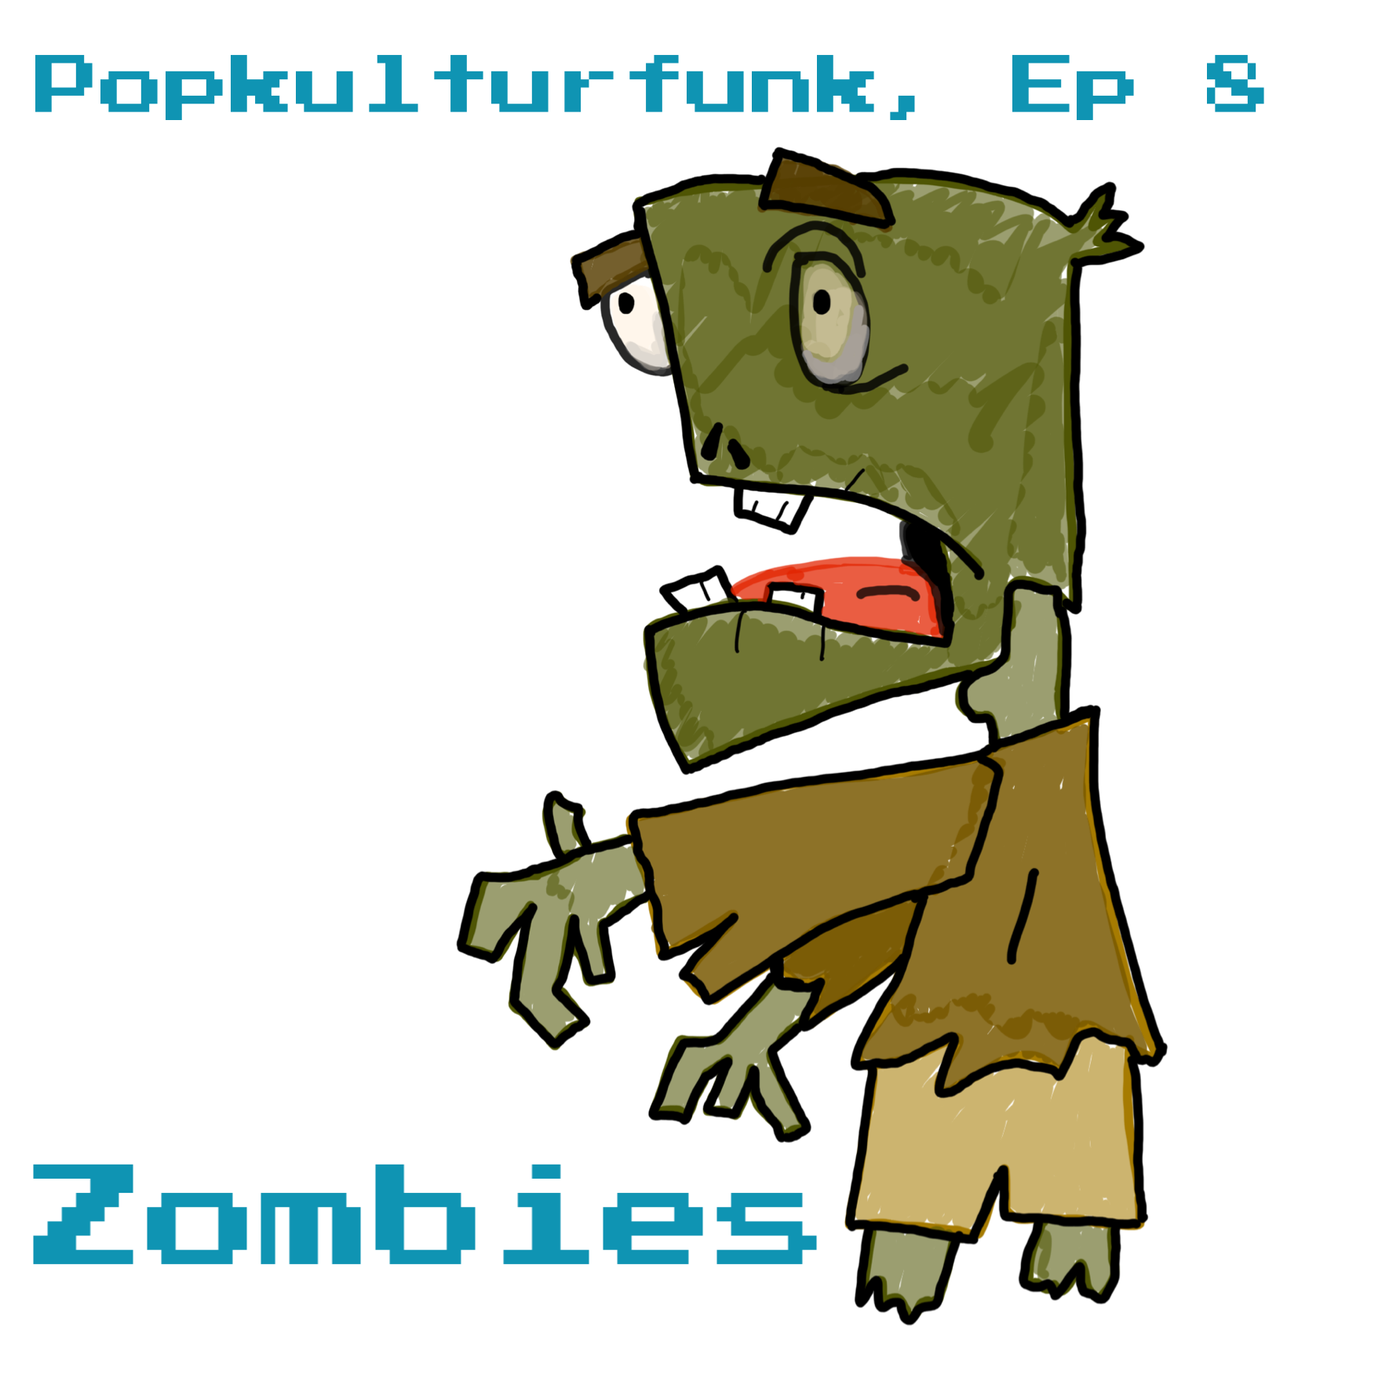 Episode 8: Zombies!